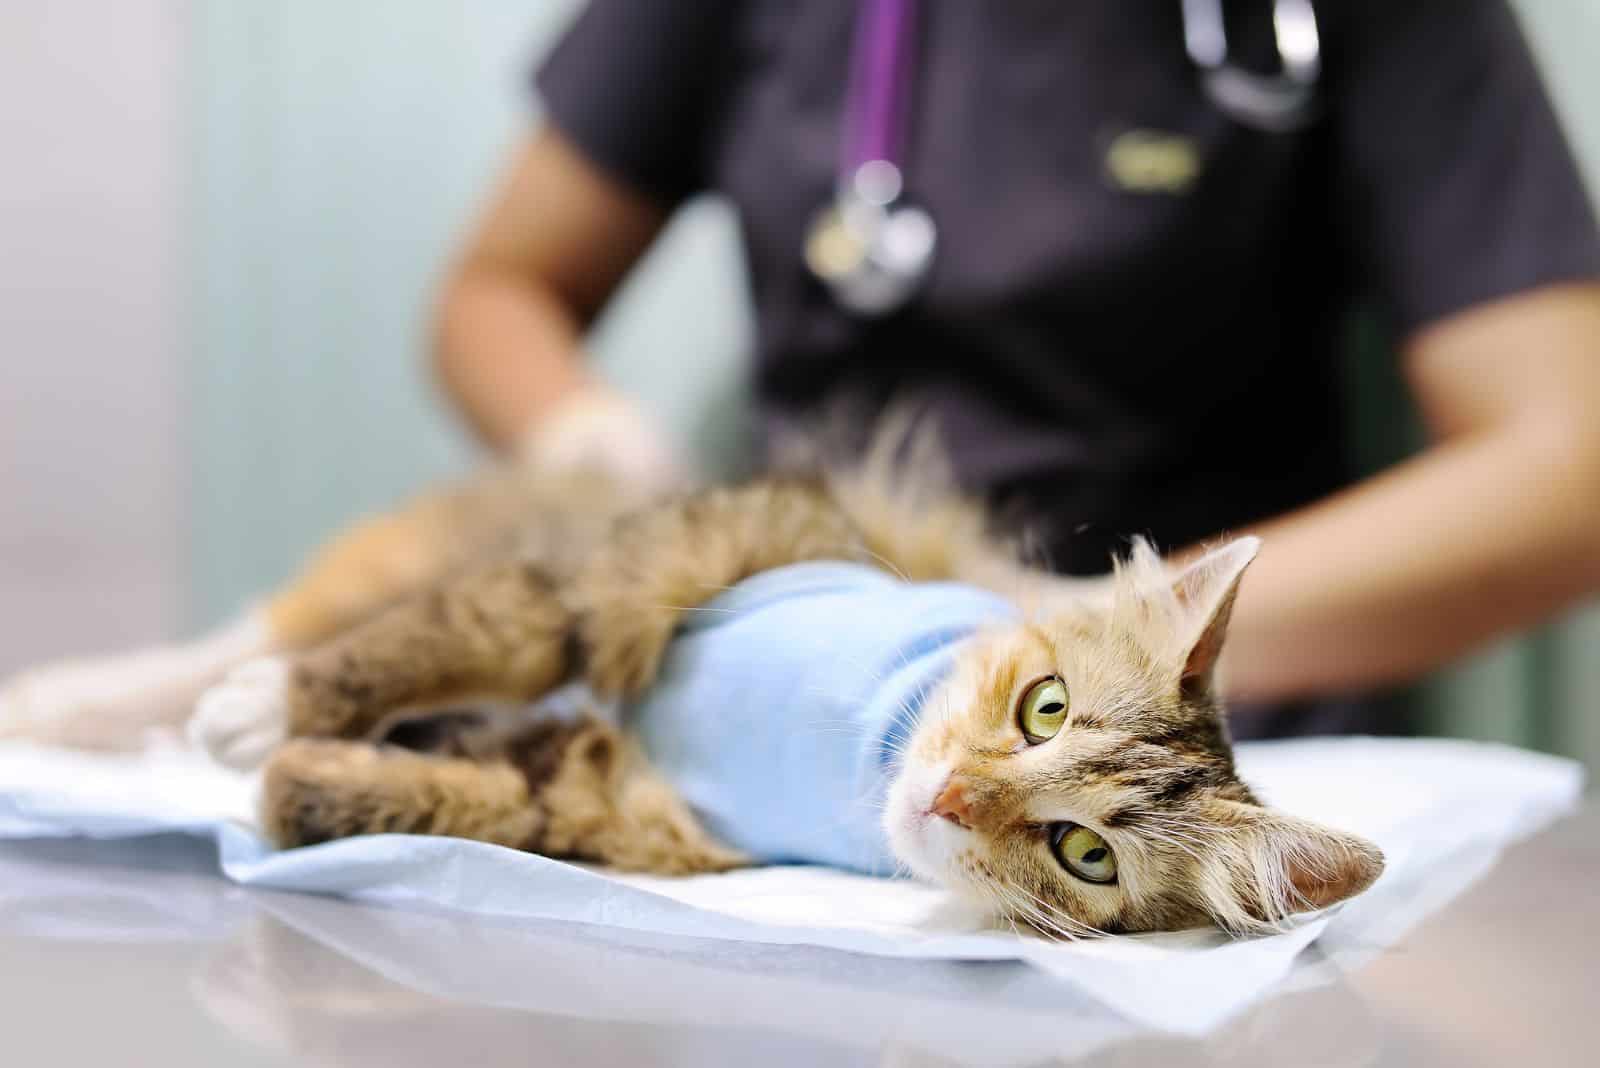 the vet sterilizes the cat